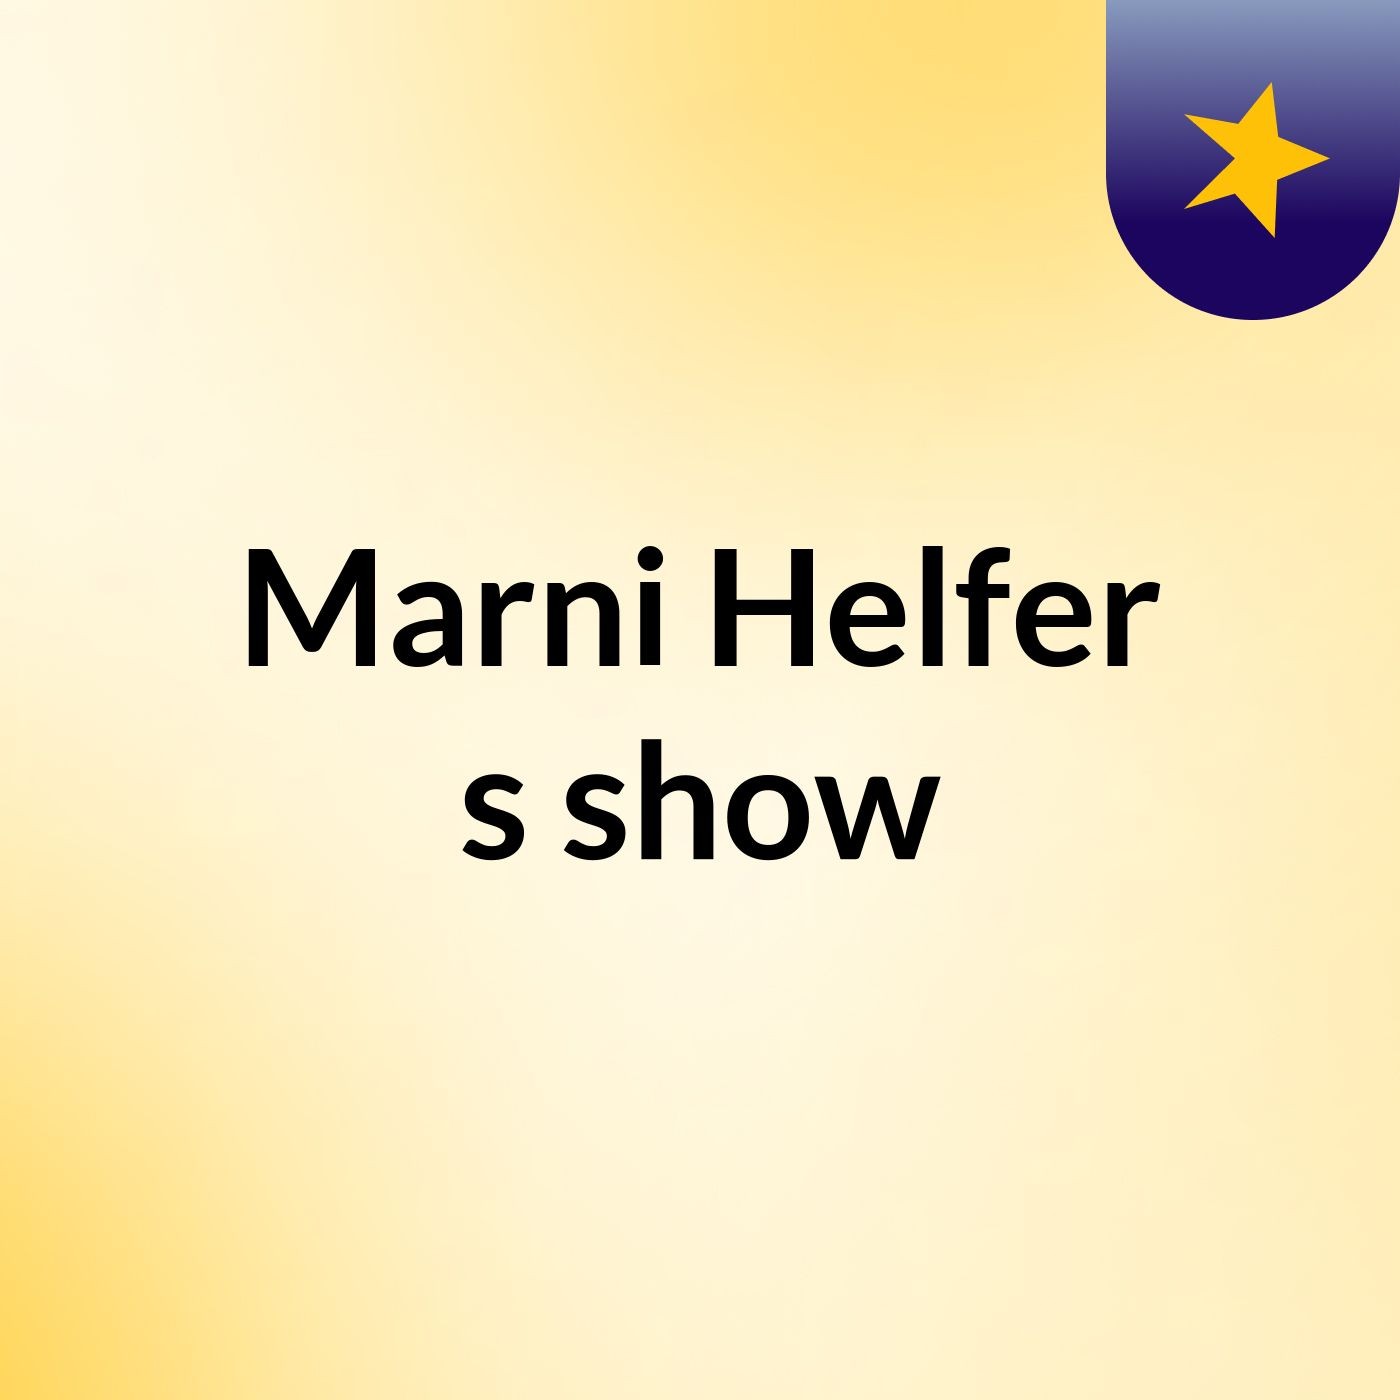 Marni Helfer's show